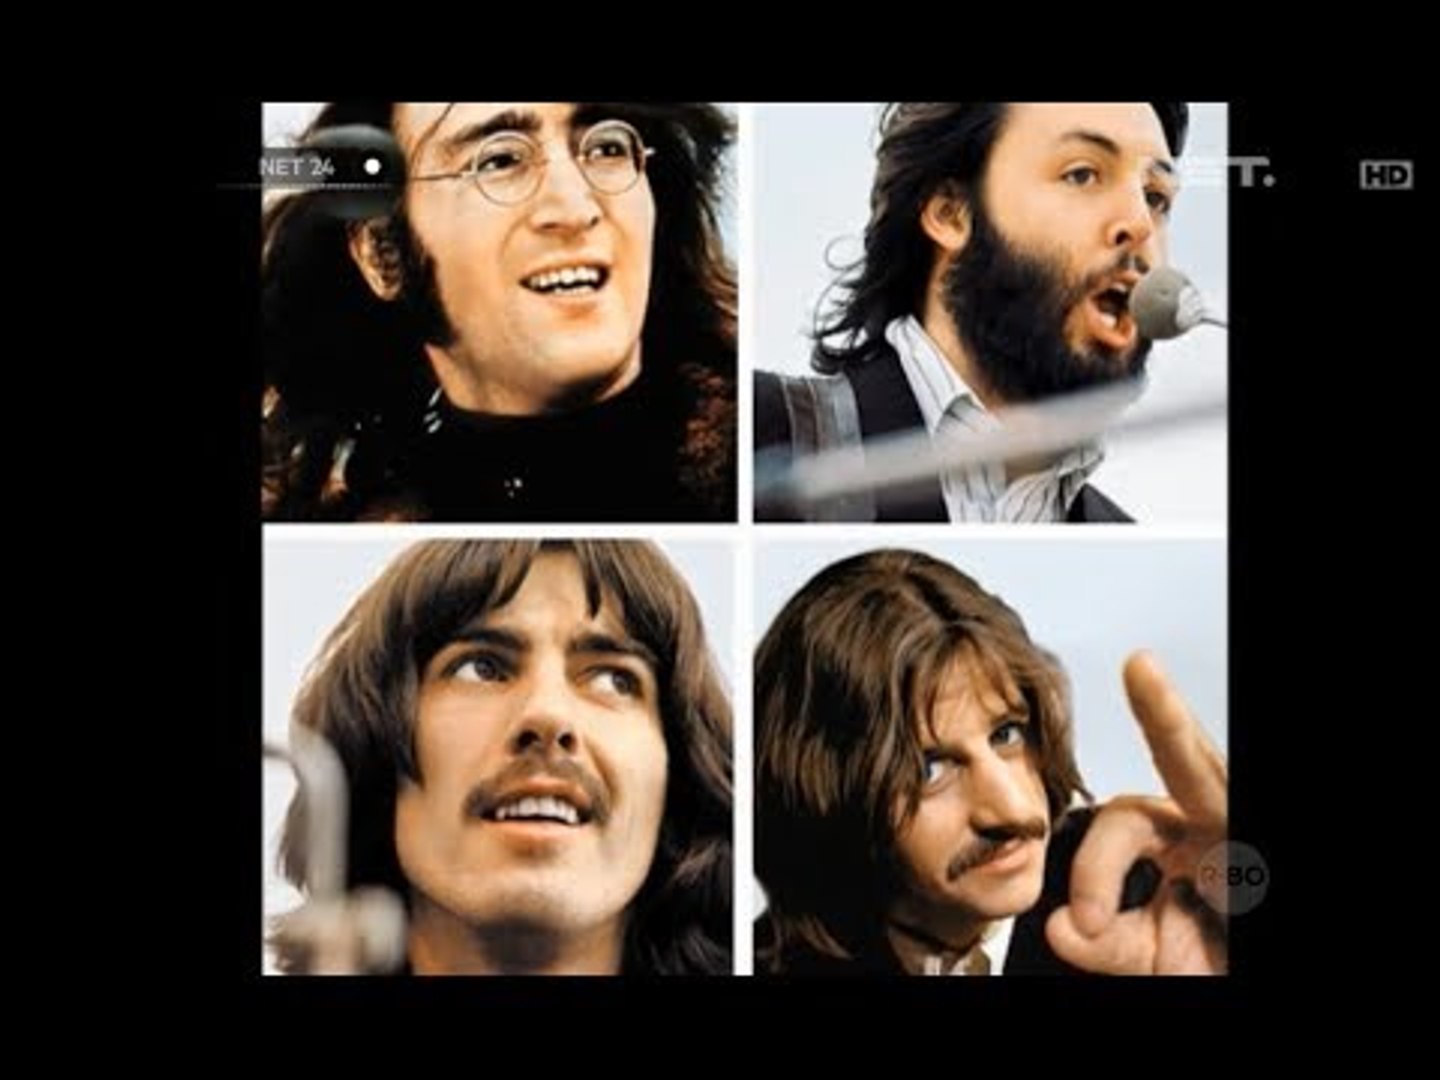 ⁣NET24 - Legend The Beatles